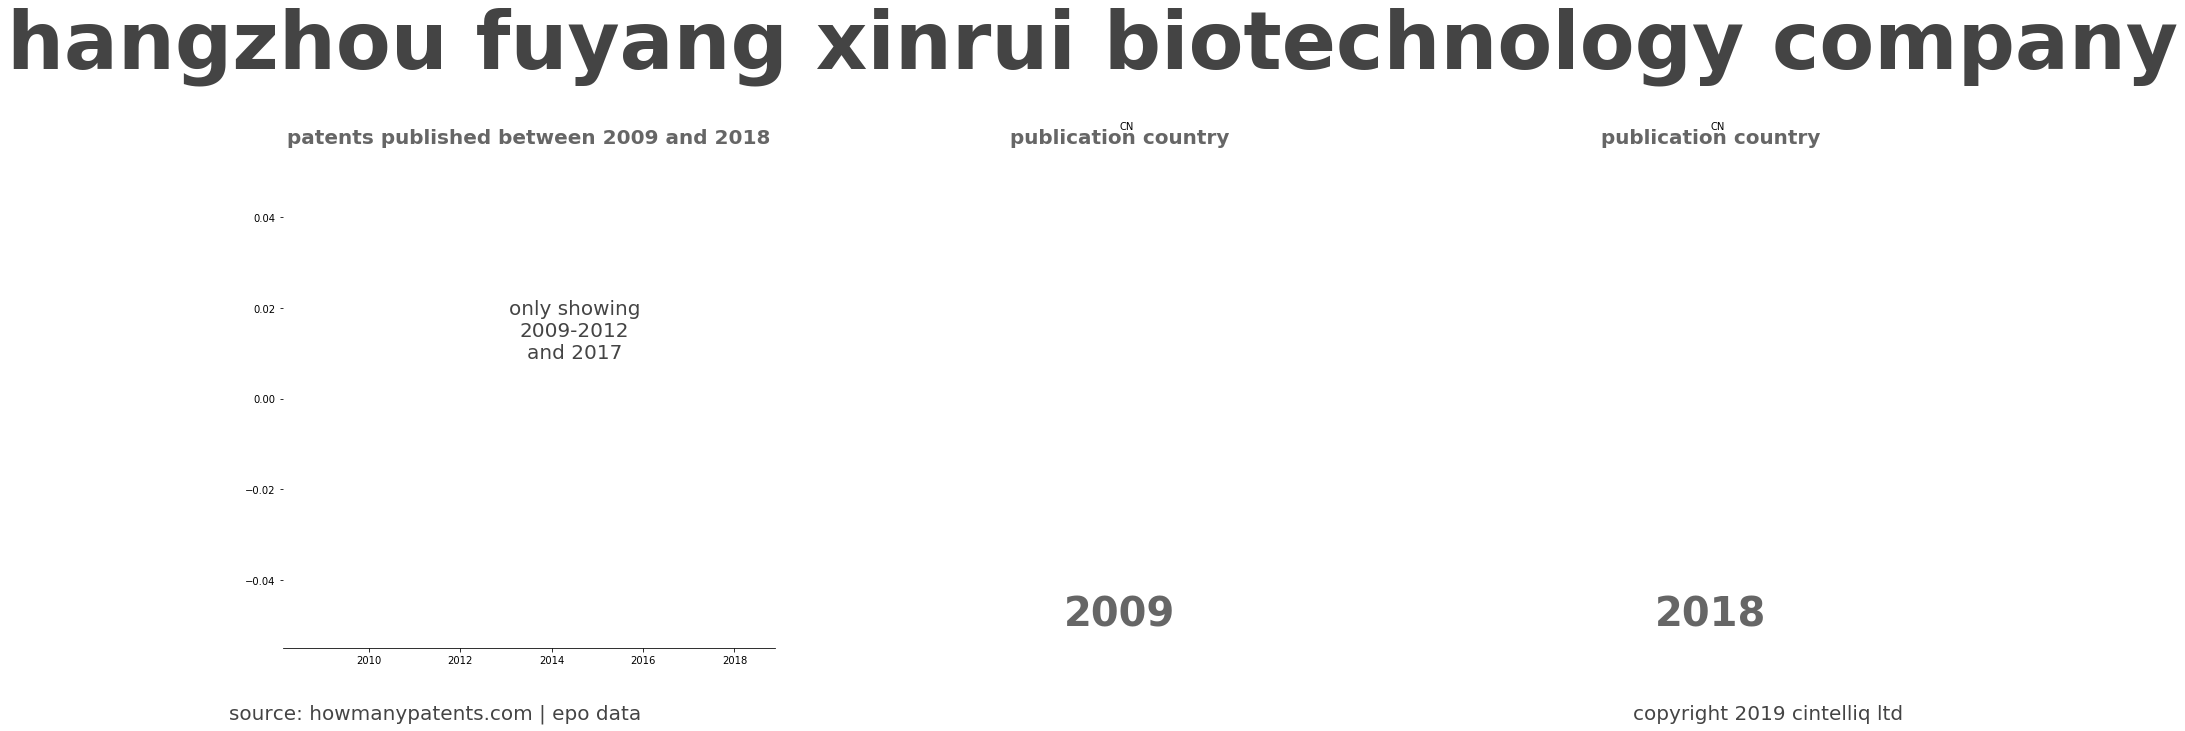 summary of patents for Hangzhou Fuyang Xinrui Biotechnology Company